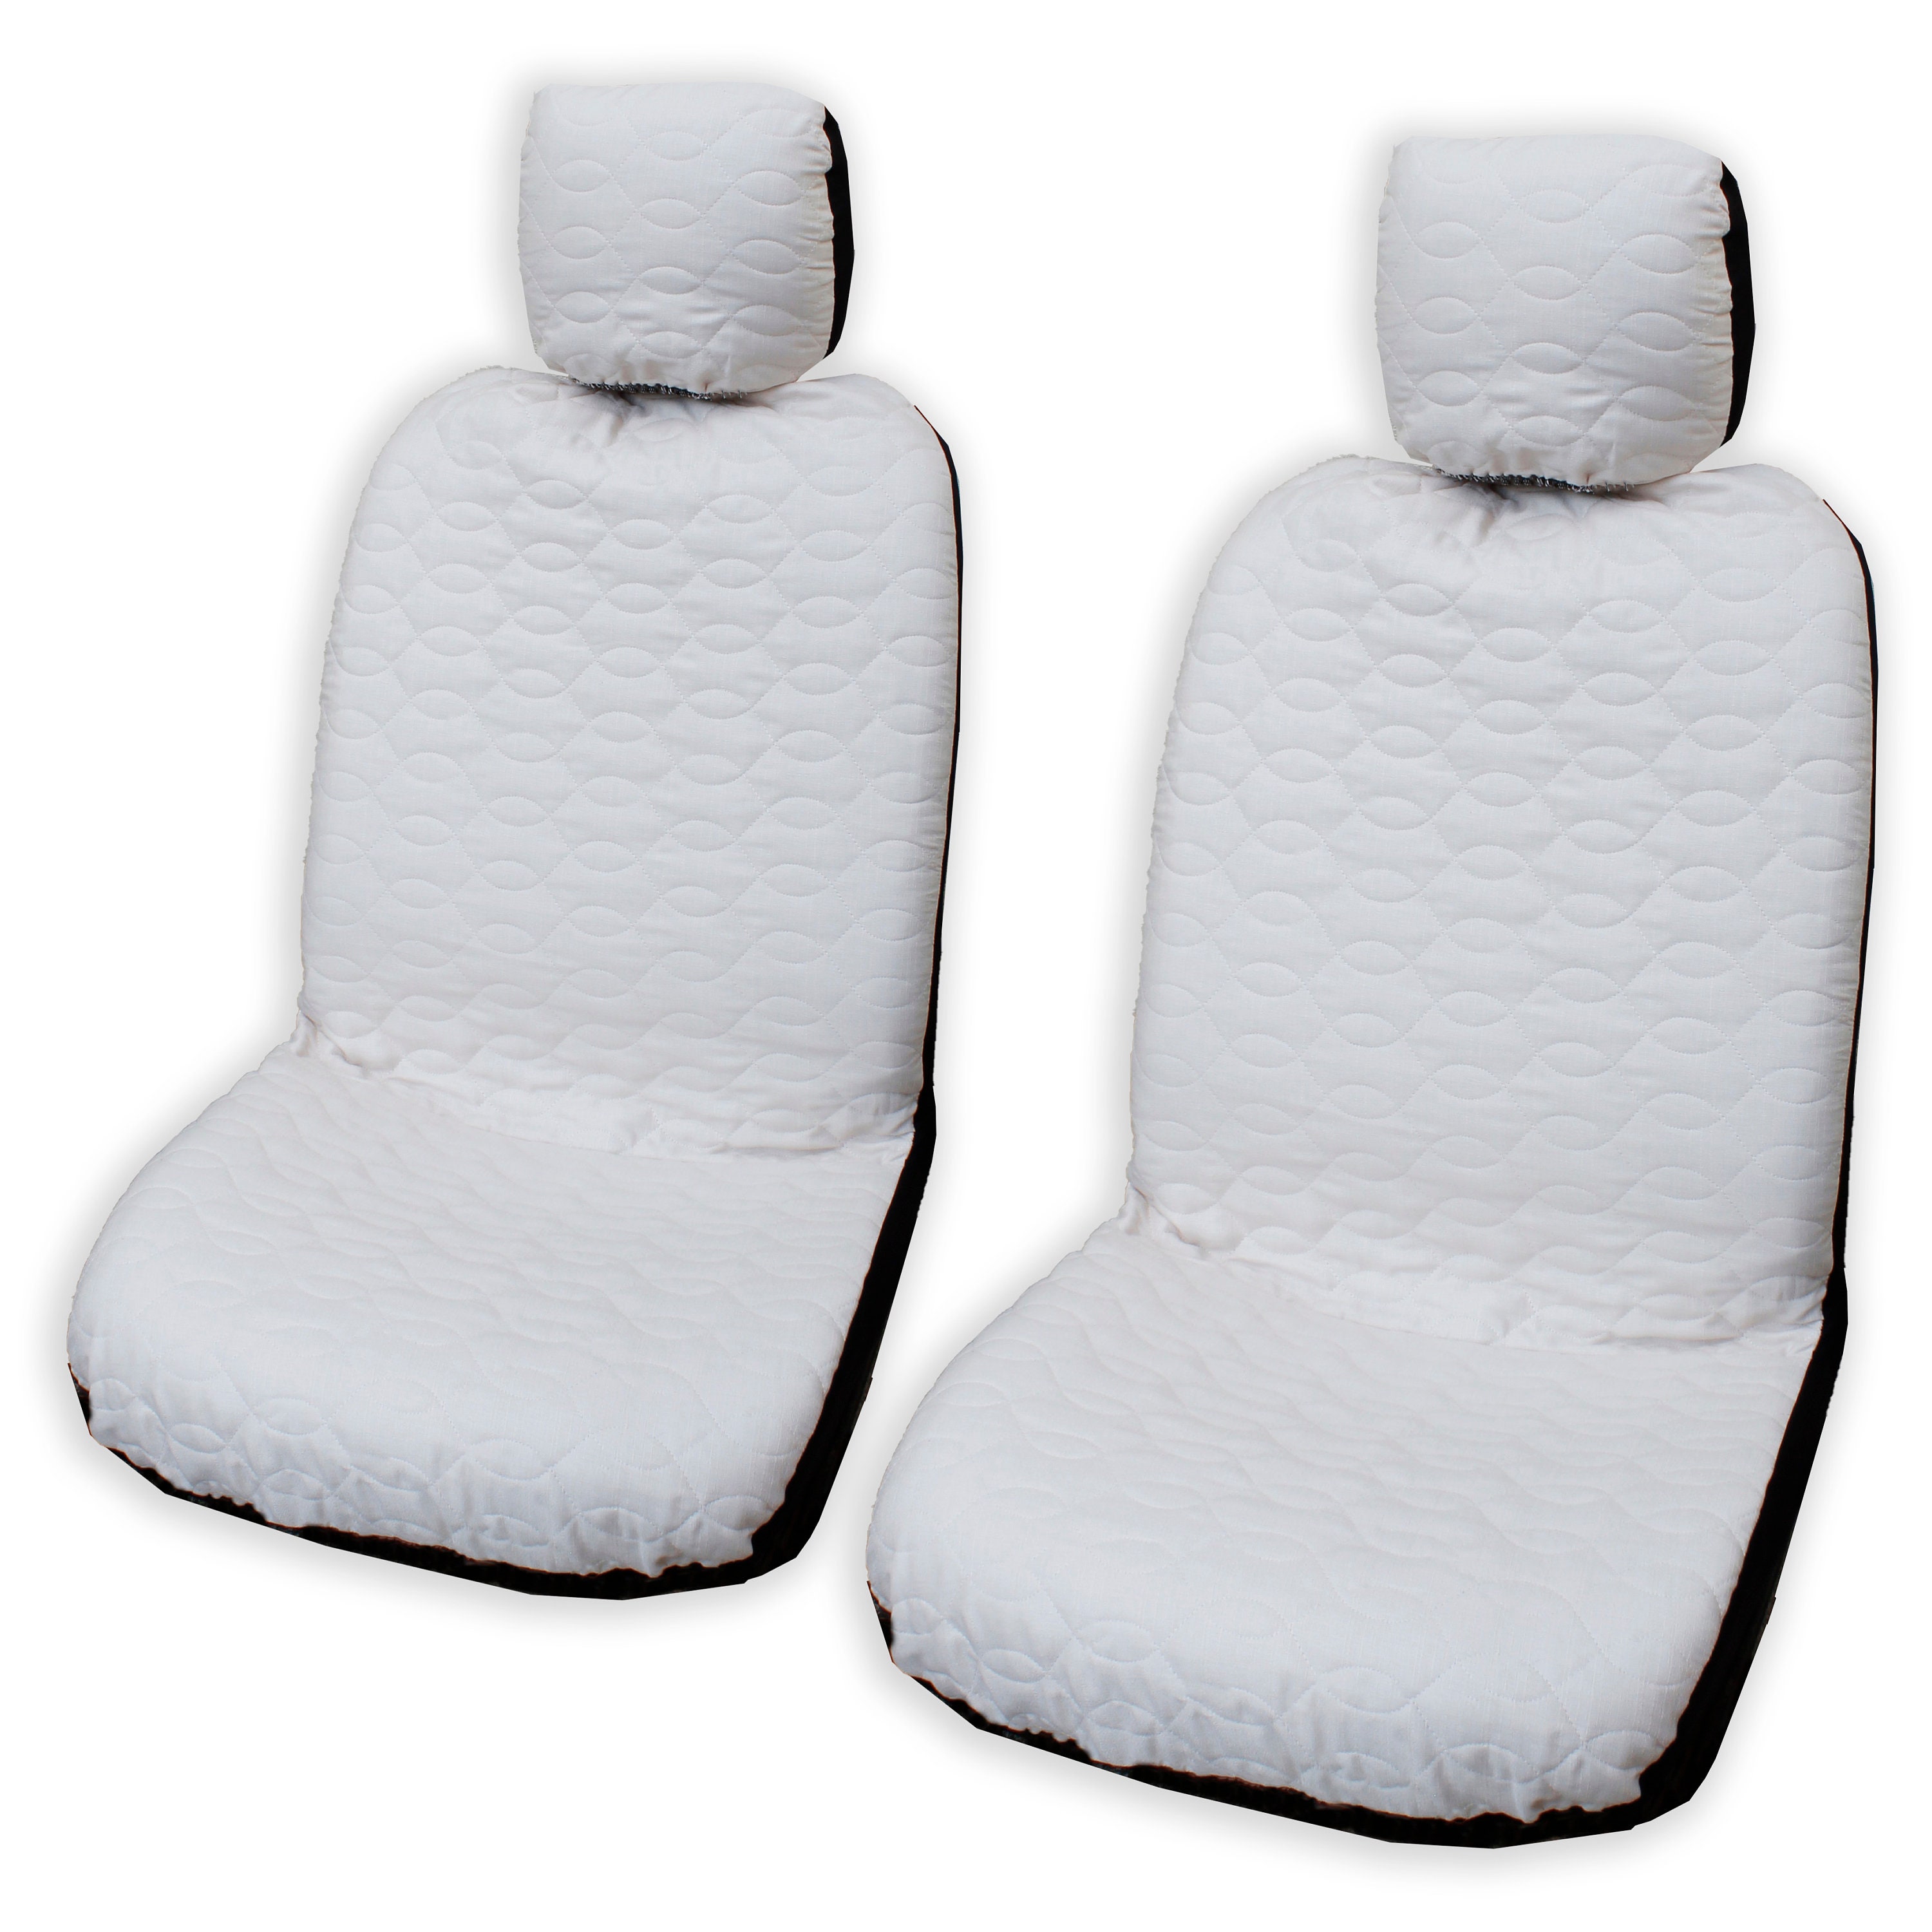 Malo'o Quick-Dry SeatGuard Terry Cloth Car Seat Cover, Gray